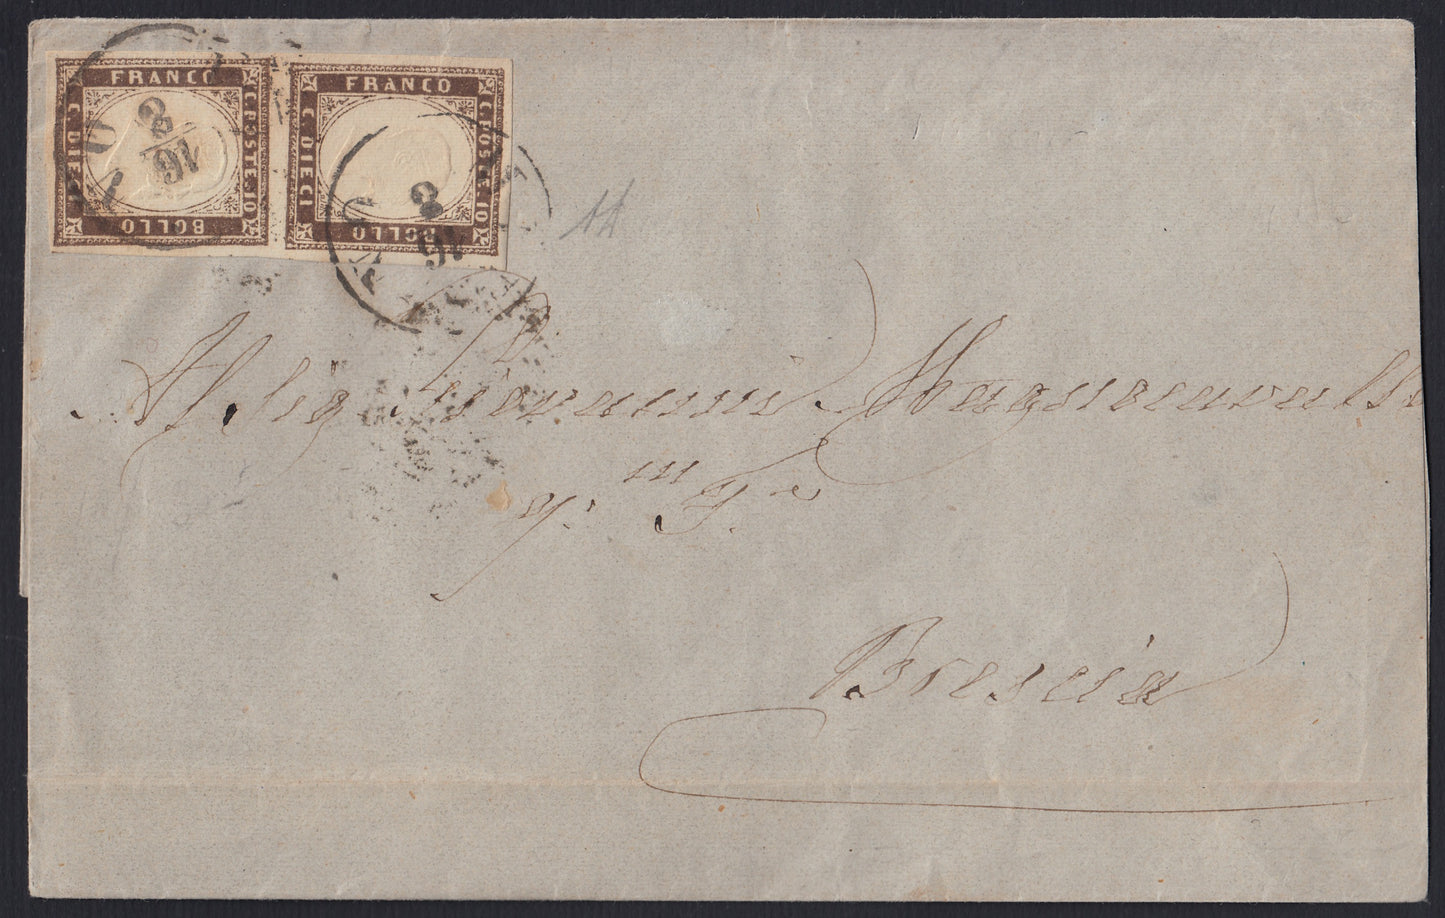 179 - 1859 - Carta enviada desde Milán a Brescia el 16/08/59 franqueada con c. 10 par vertical de mesa marrón grisáceo I. (14A).